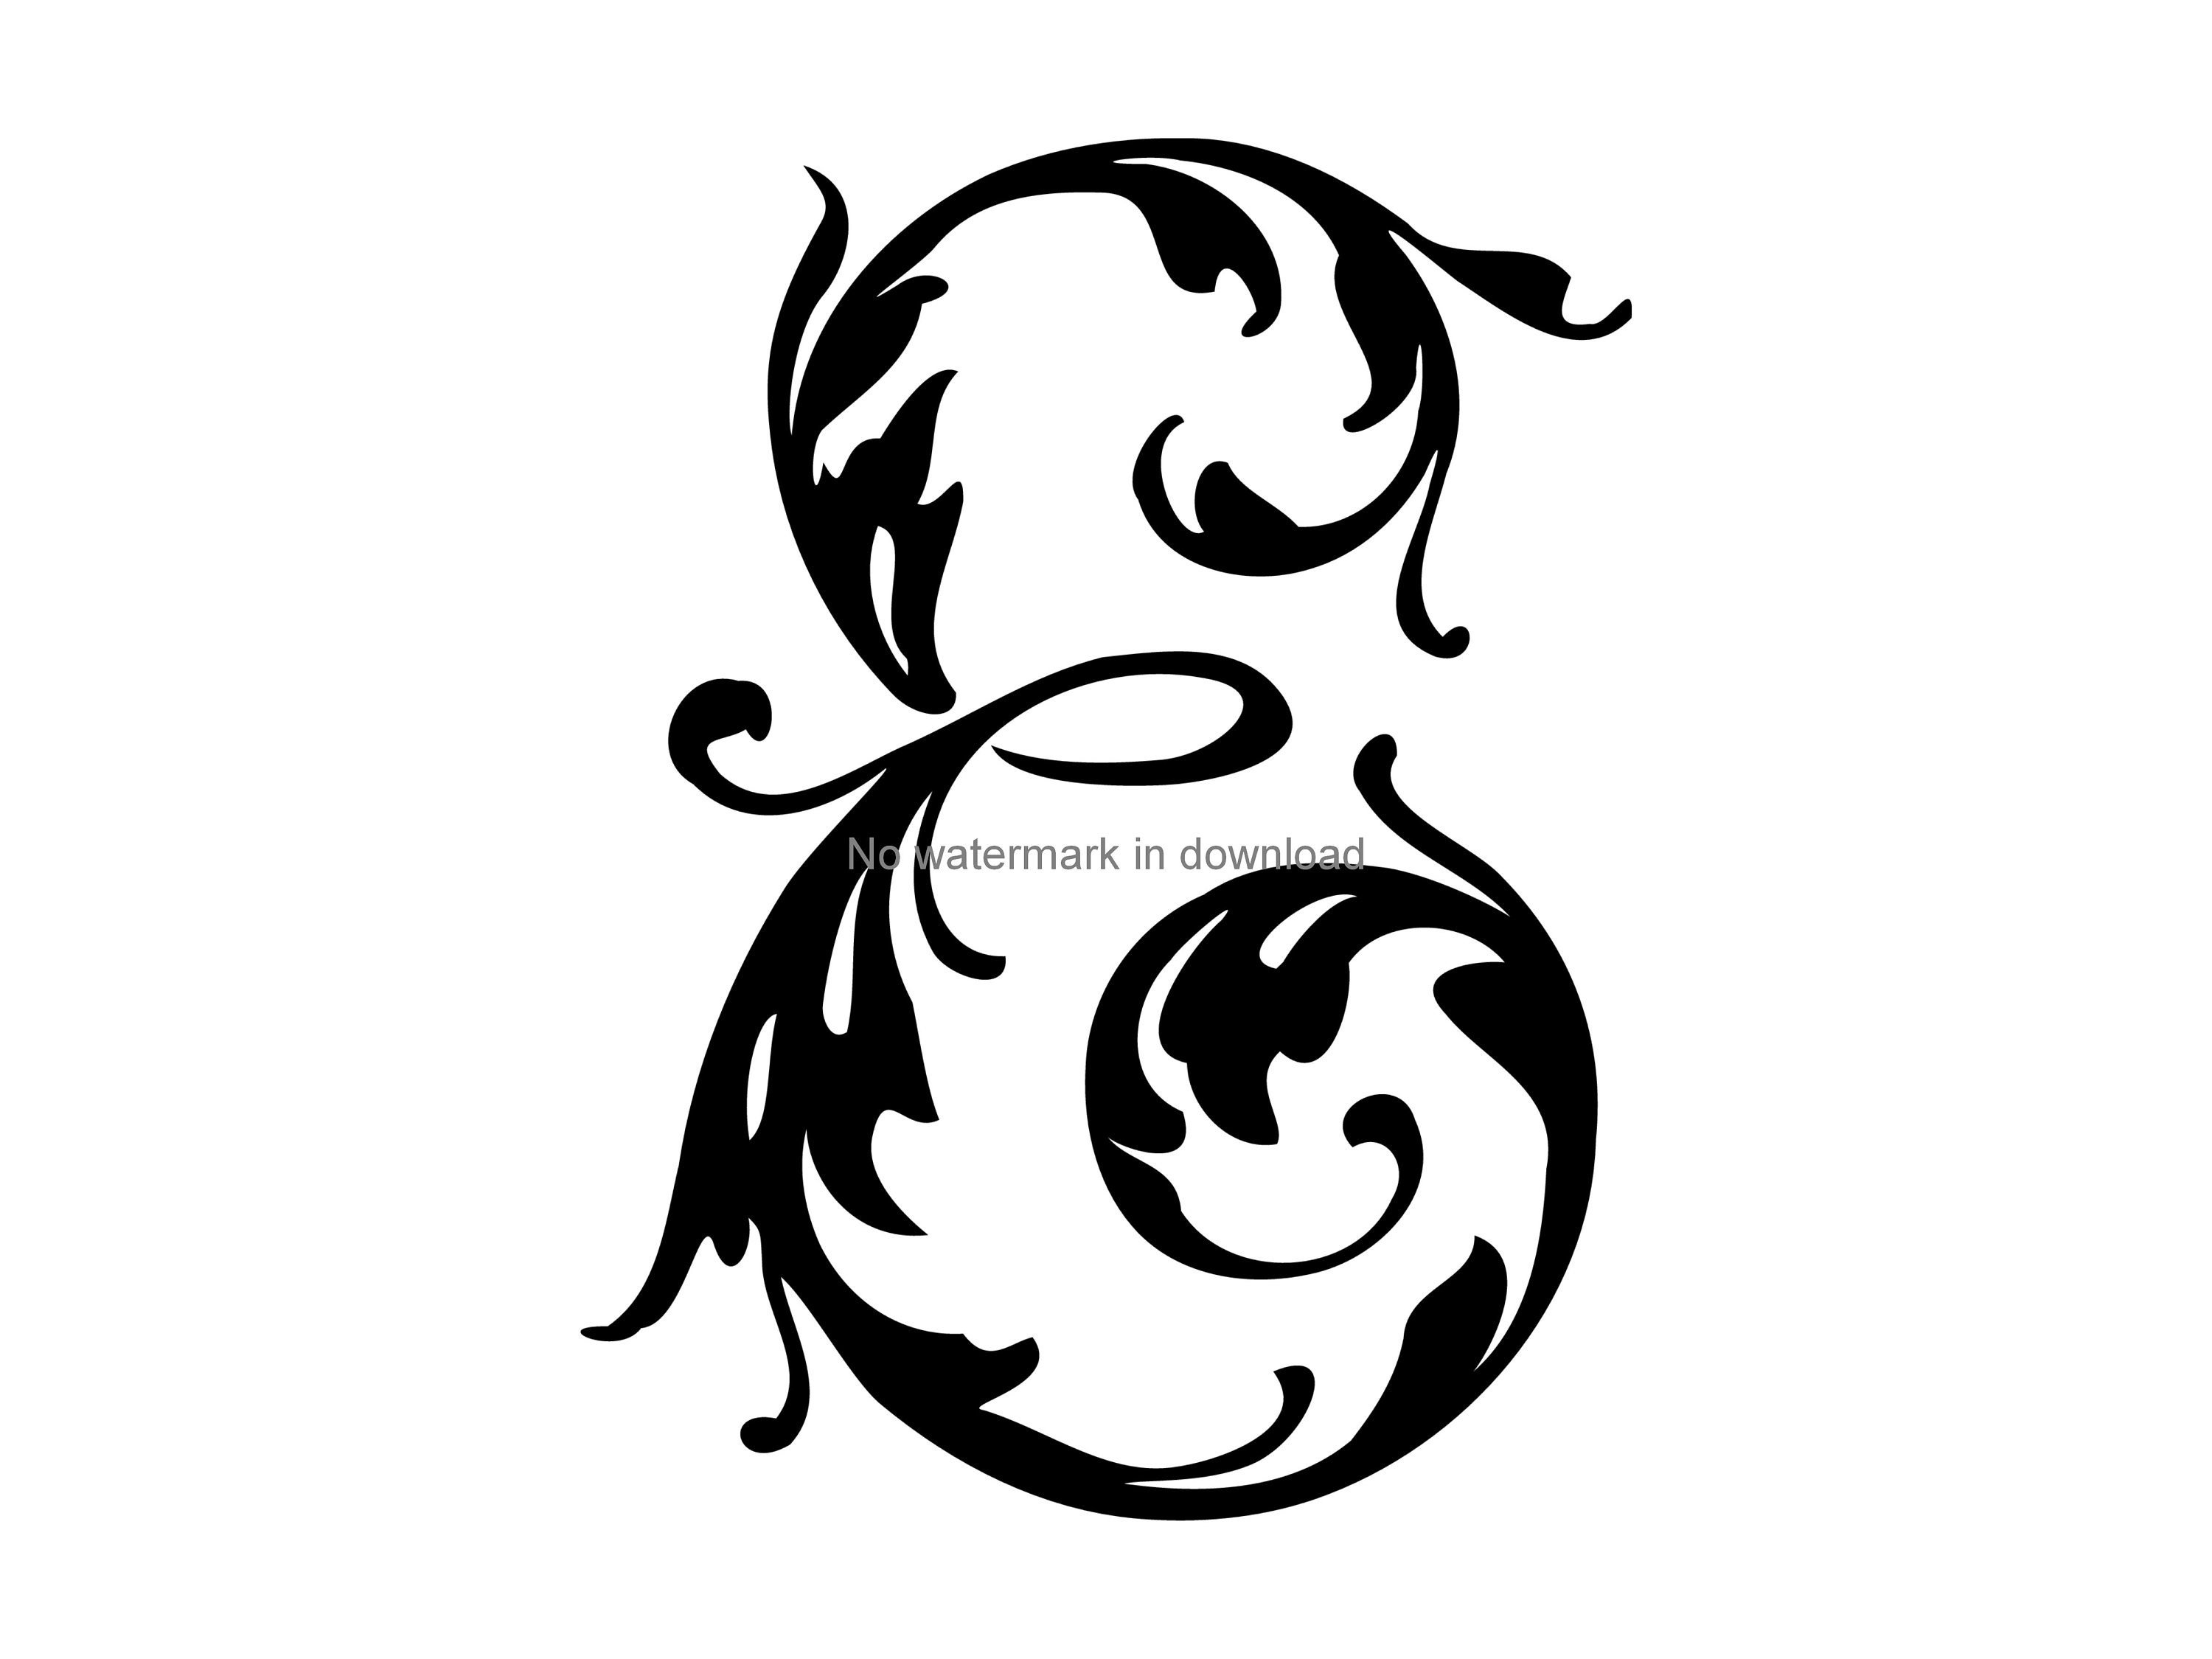 Monogram Cursive Initial M Name Bracelet Swirl English Alphabet